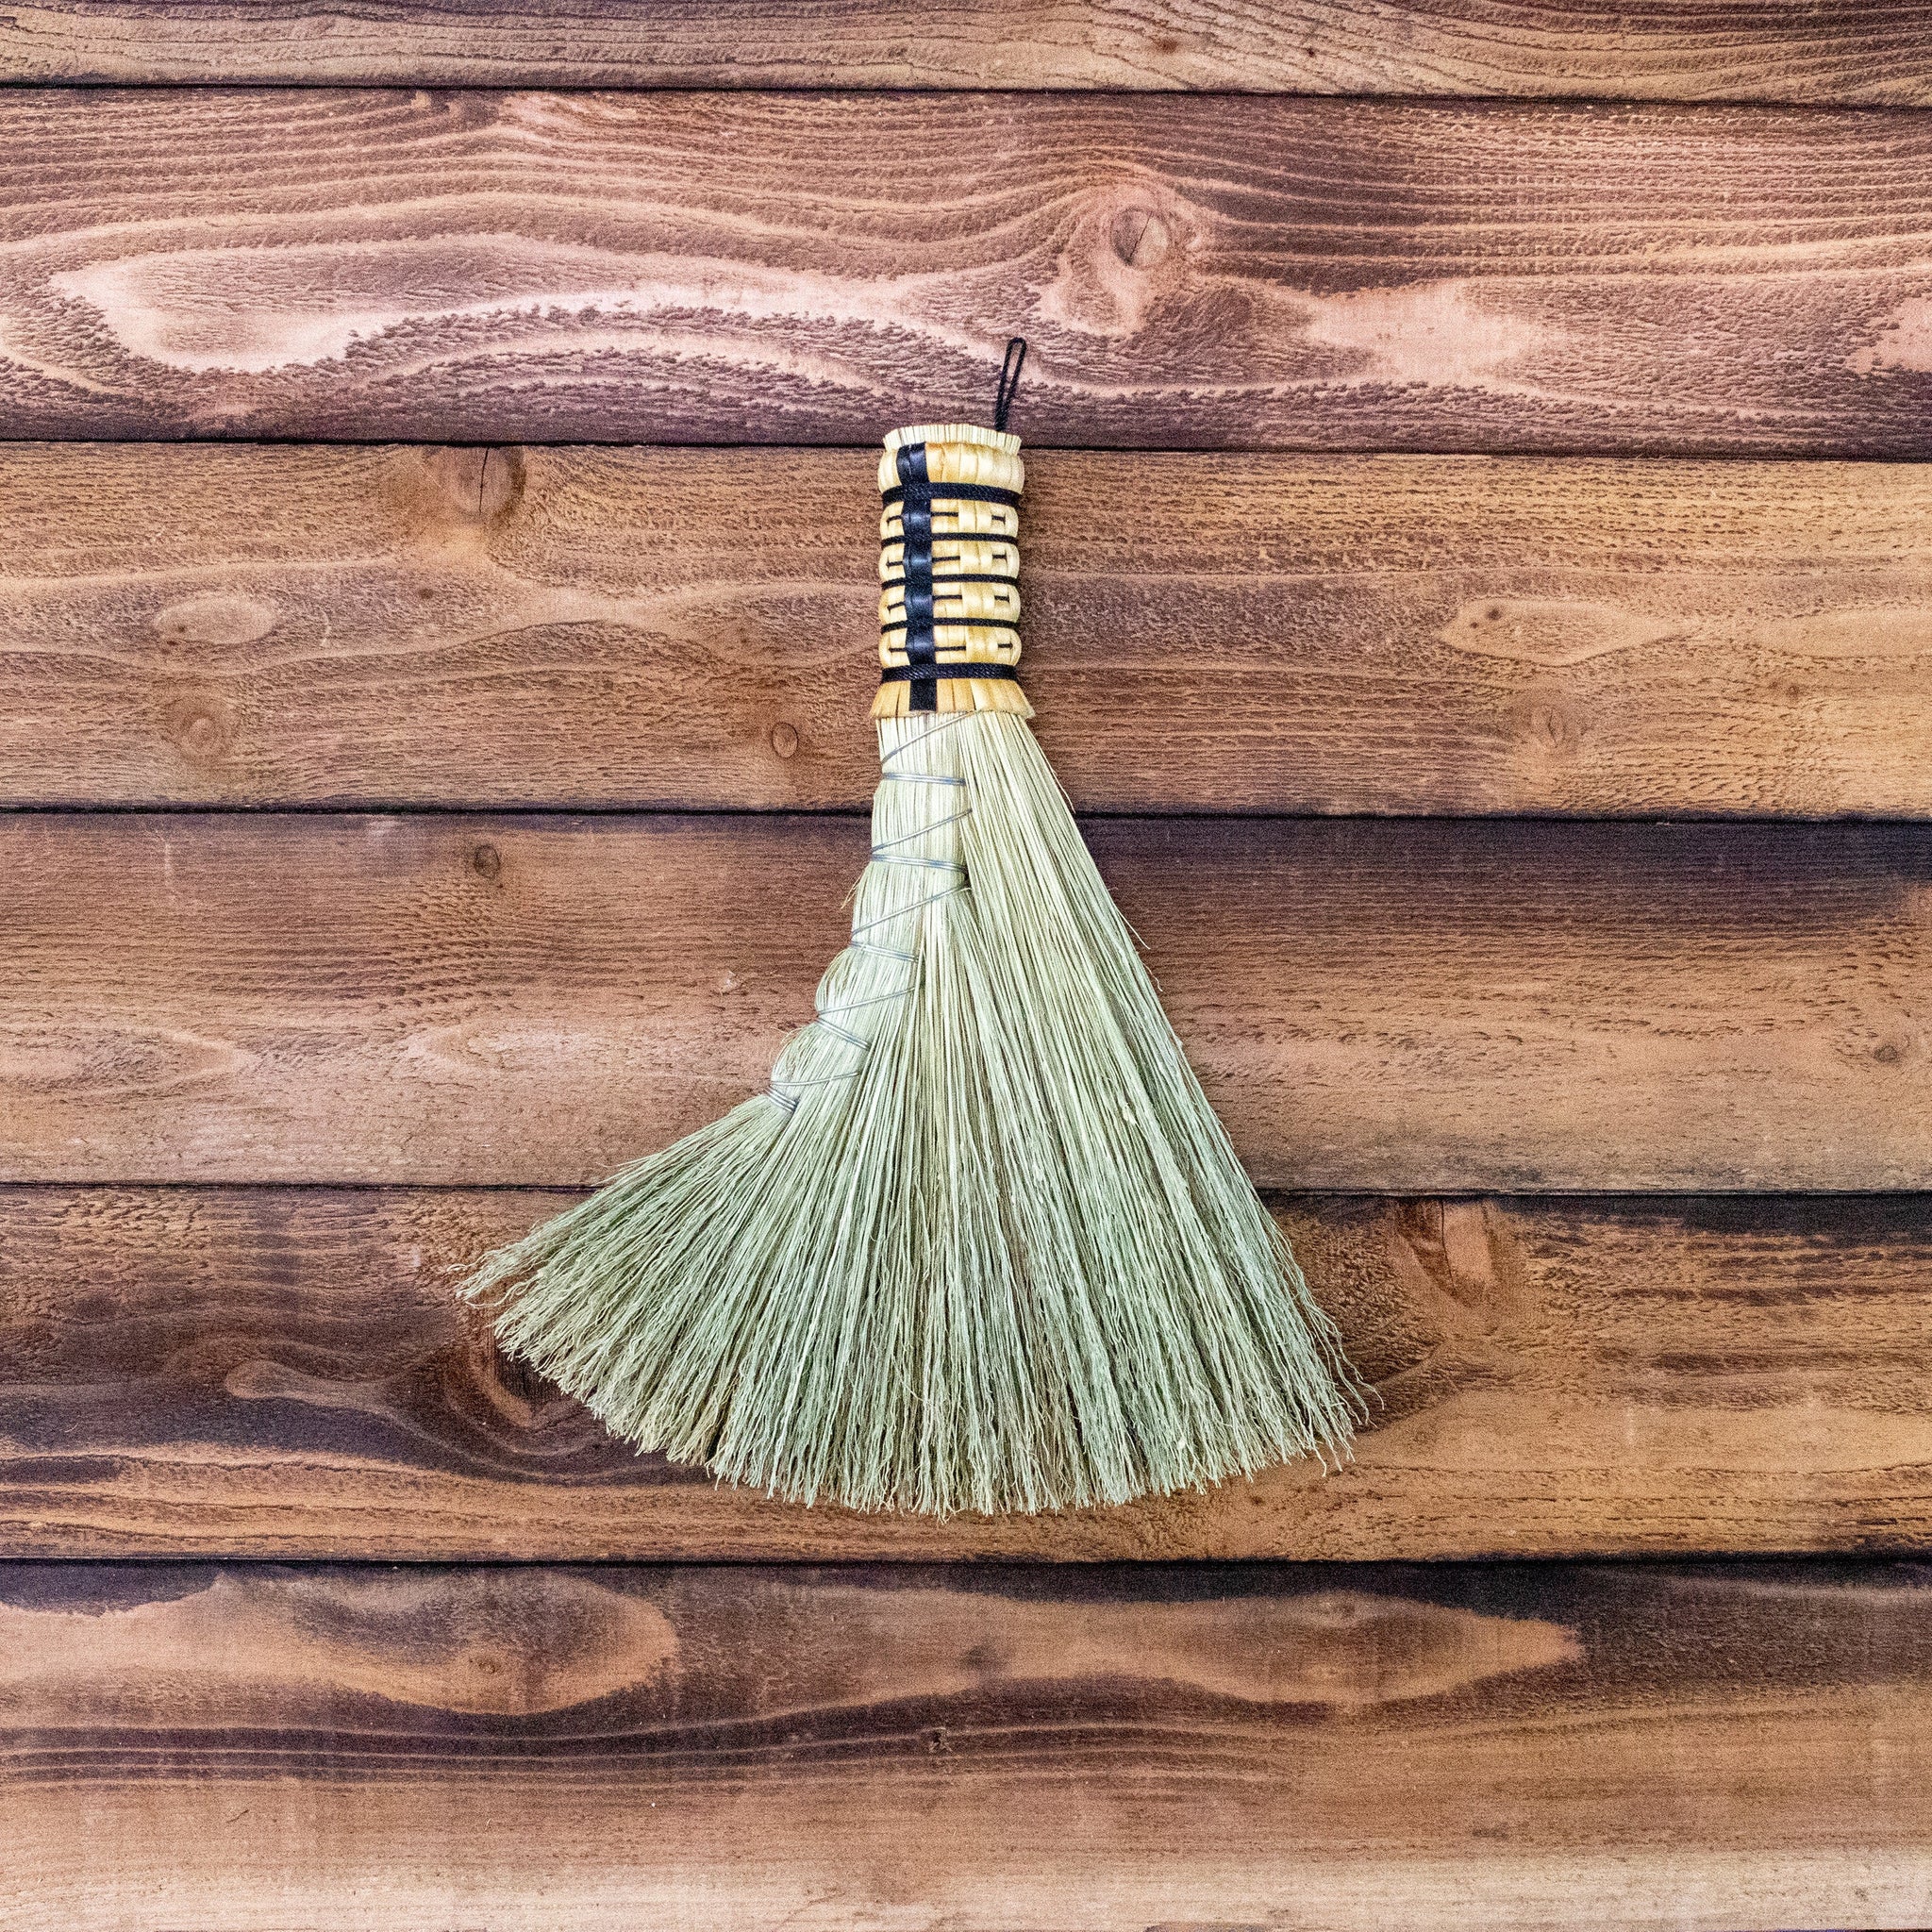 Angel Wing Whisk Broom - Natural - Handmade Broom, Rustic Home Decor, Vintage, Altar Broom, Ceremonial Ritual Broom, Hand broom